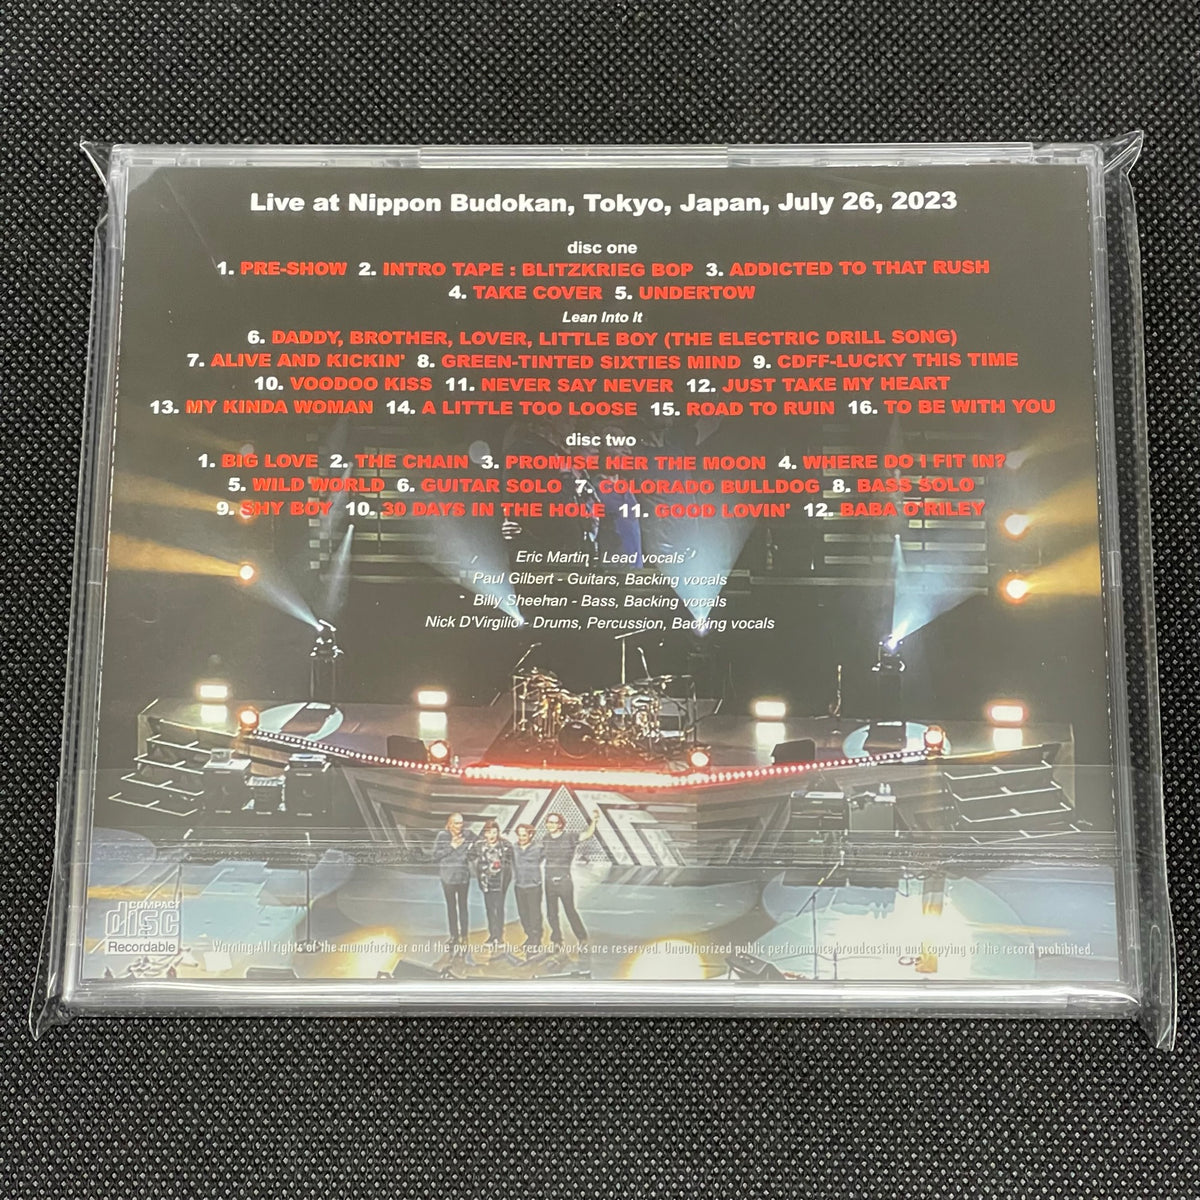 MR. BIG - THE BIG FINISH: FINAL NIGHT AT BUDOKAN 2023 – Acme Hot Disc